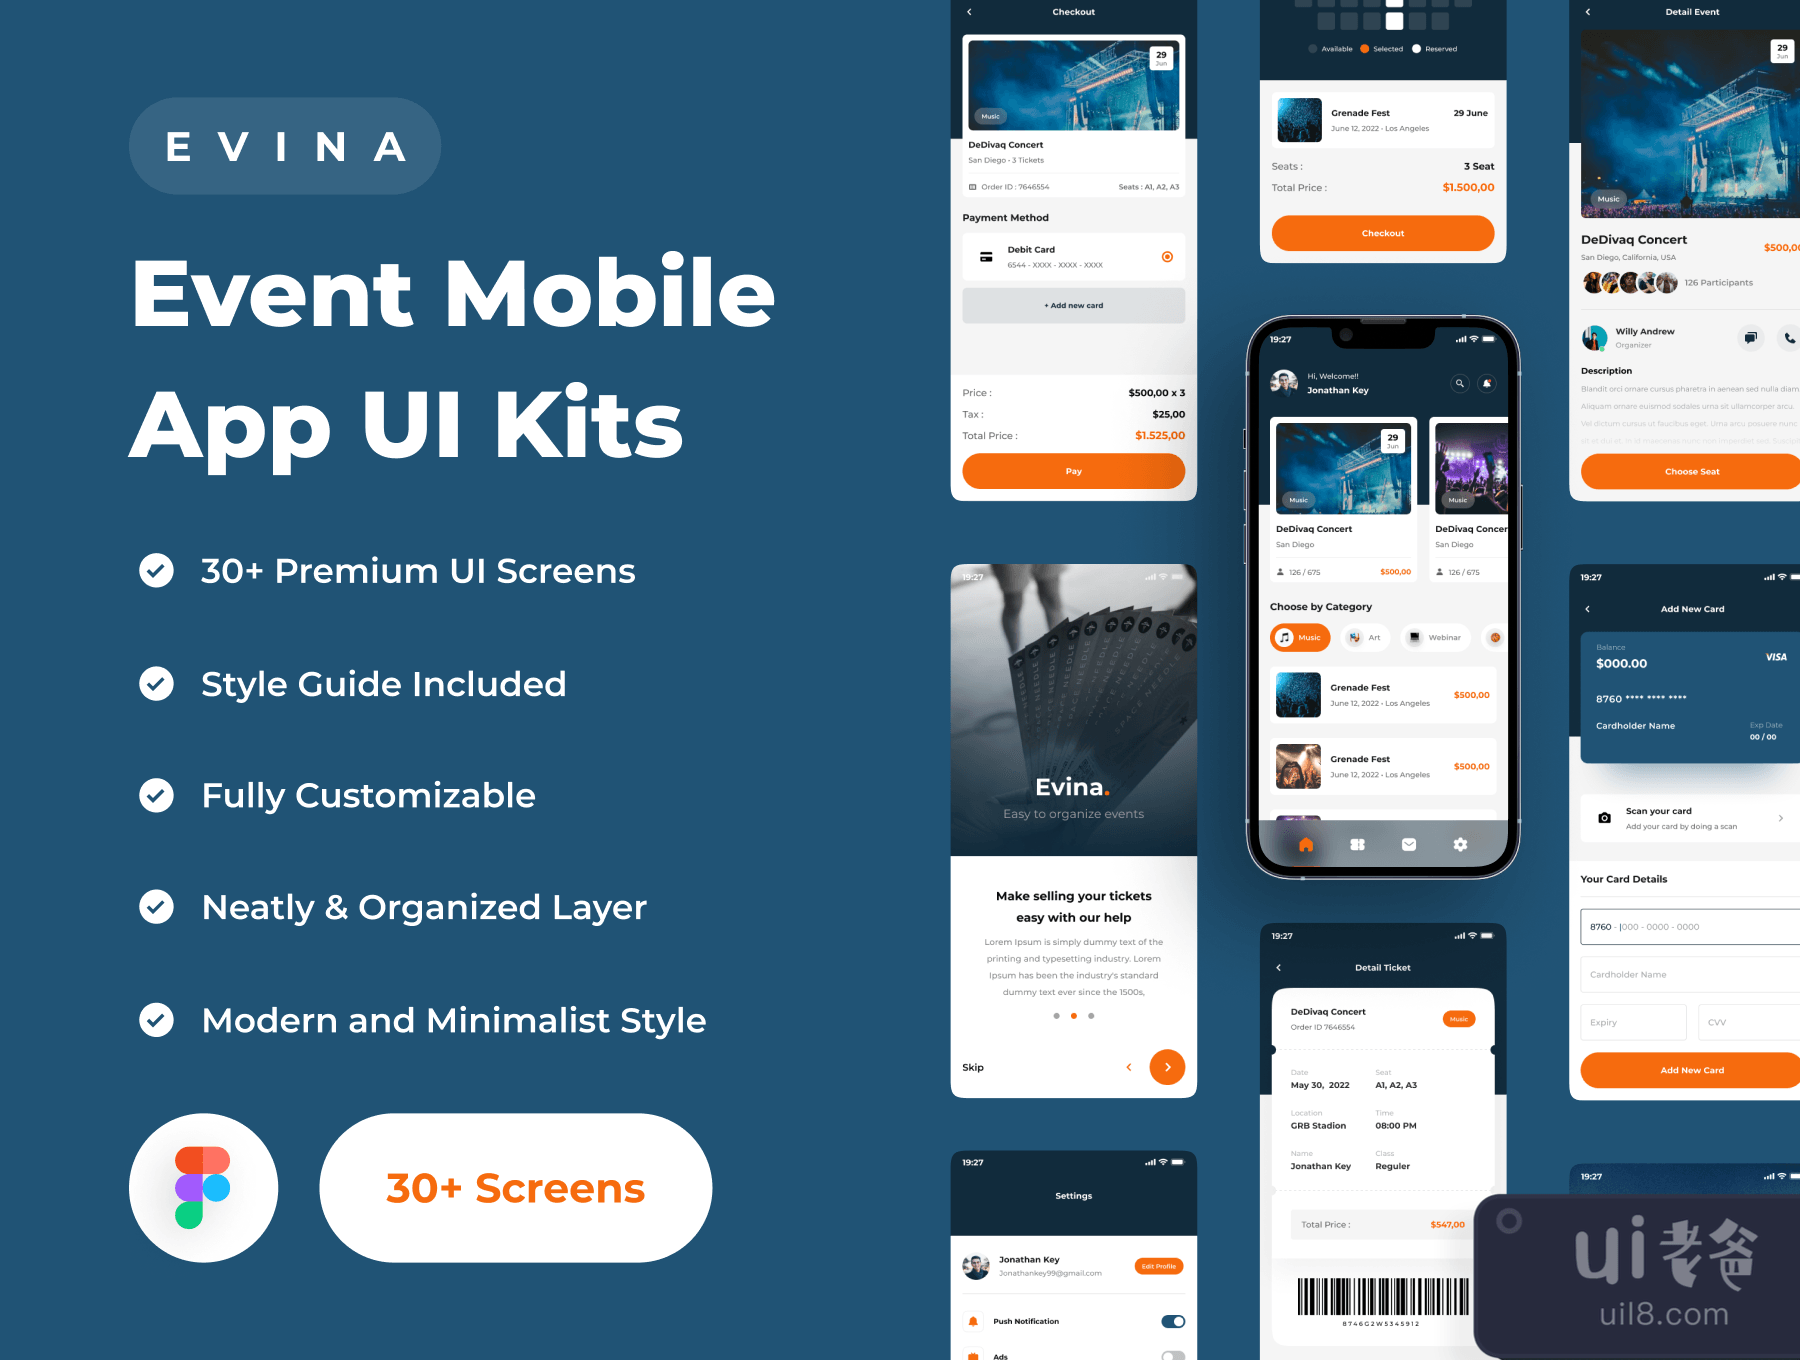 Evina - 事件移动应用程序UI套件 (Evina - Event Mobile App UI Kits)插图4